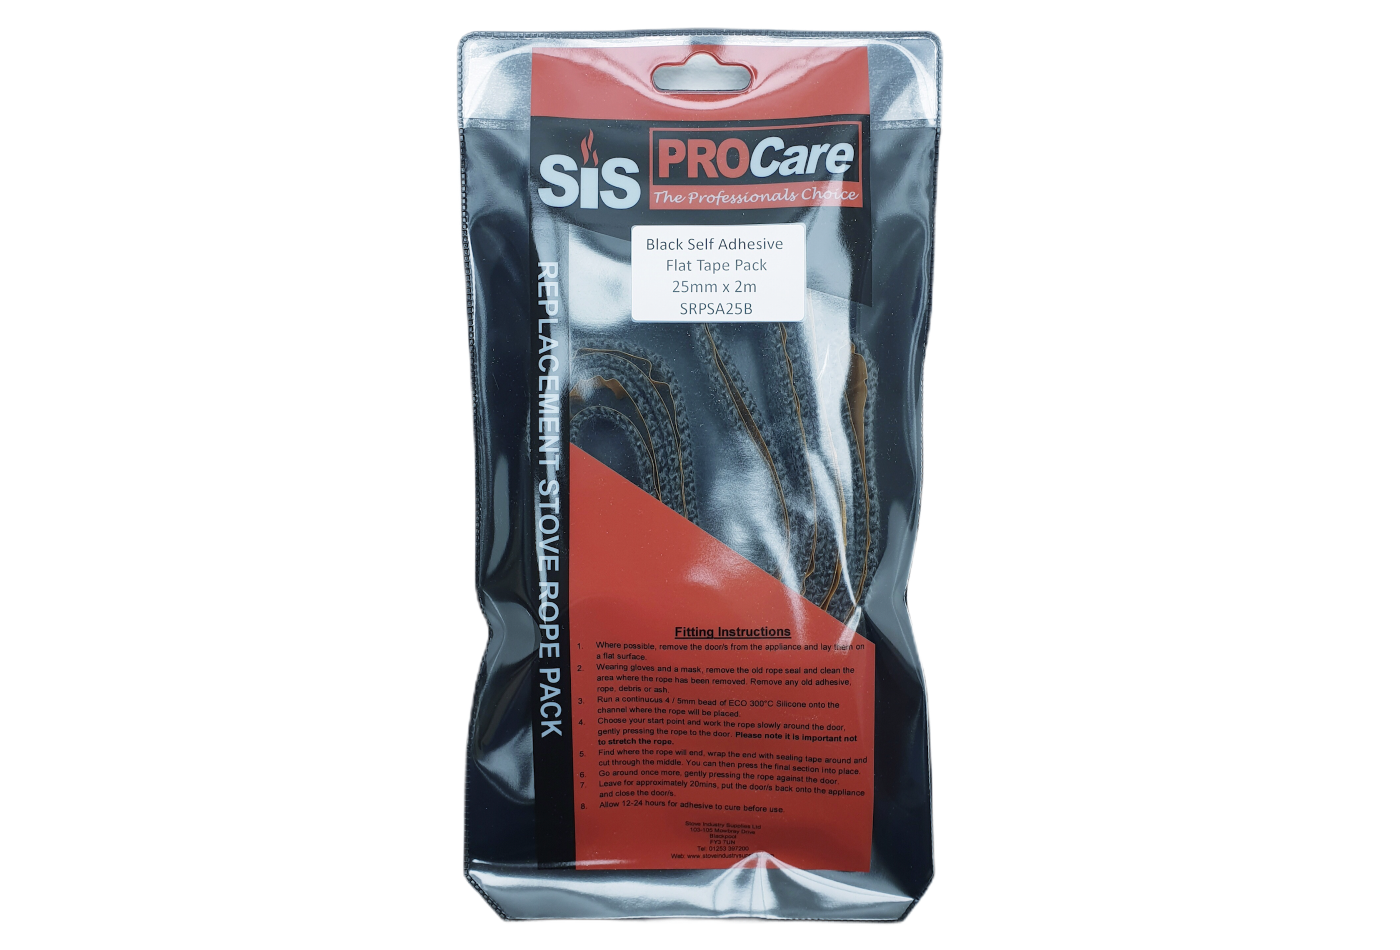 SiS Procare Black 25 metrem x 2 metre Self Adhesive Flat Rope Tape Pack - product code SRPSA25B